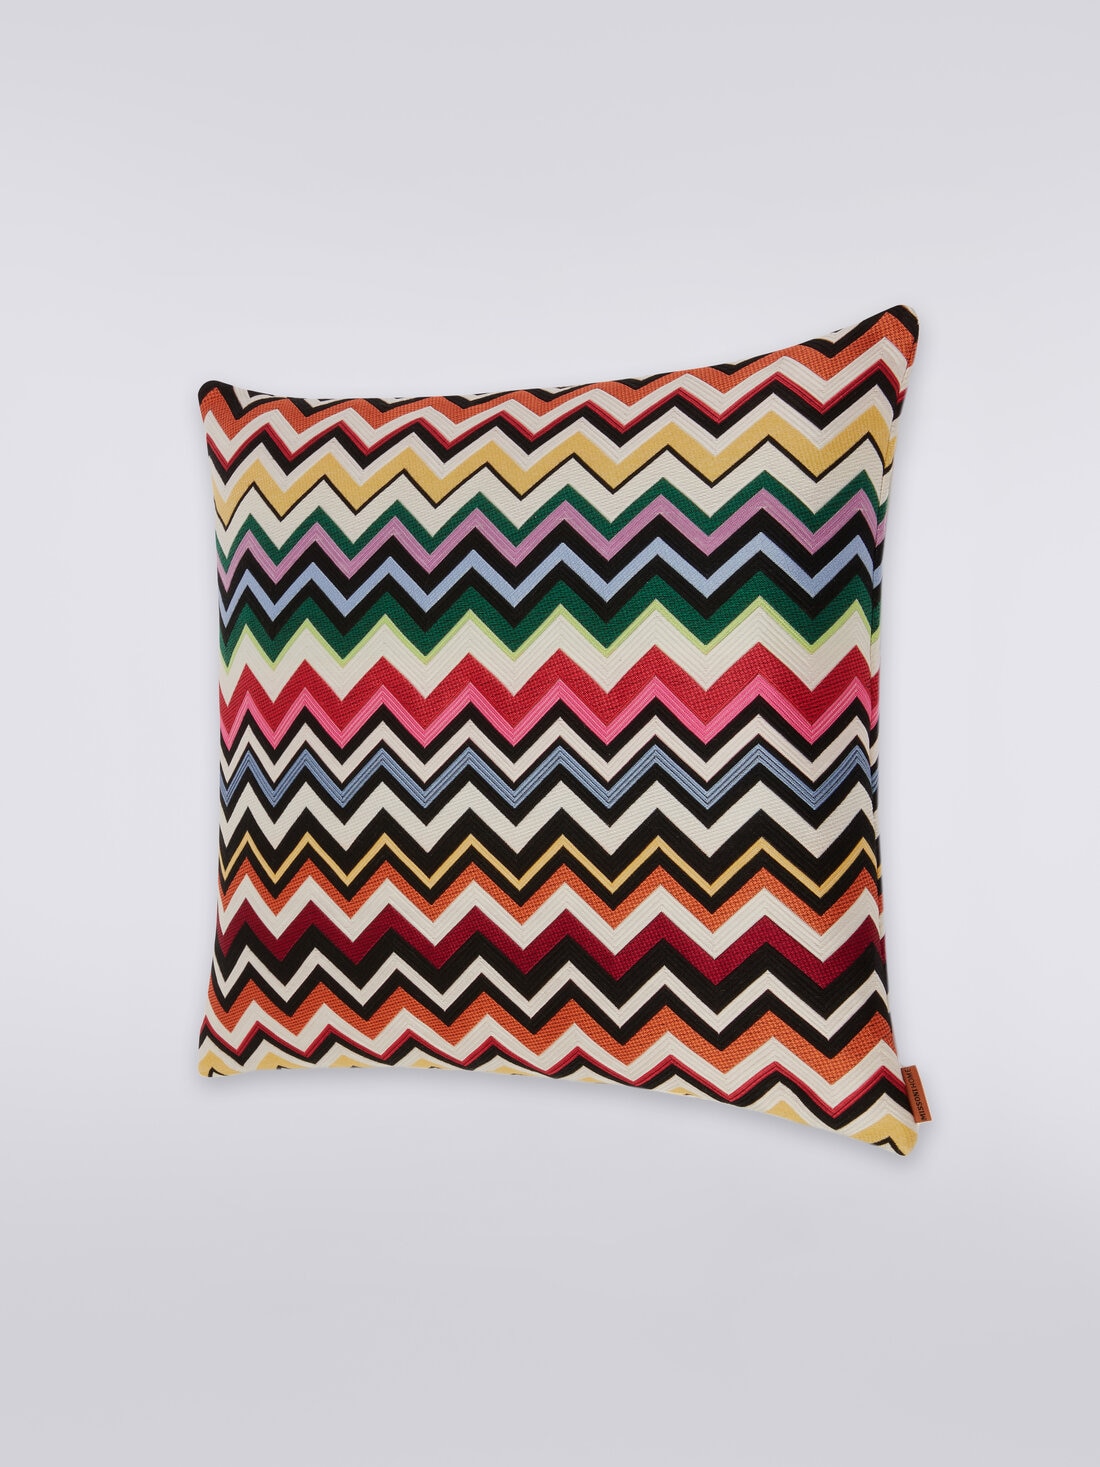 Belfast cushion 40x40 cm, Multicoloured  - 8051275581567 - 1